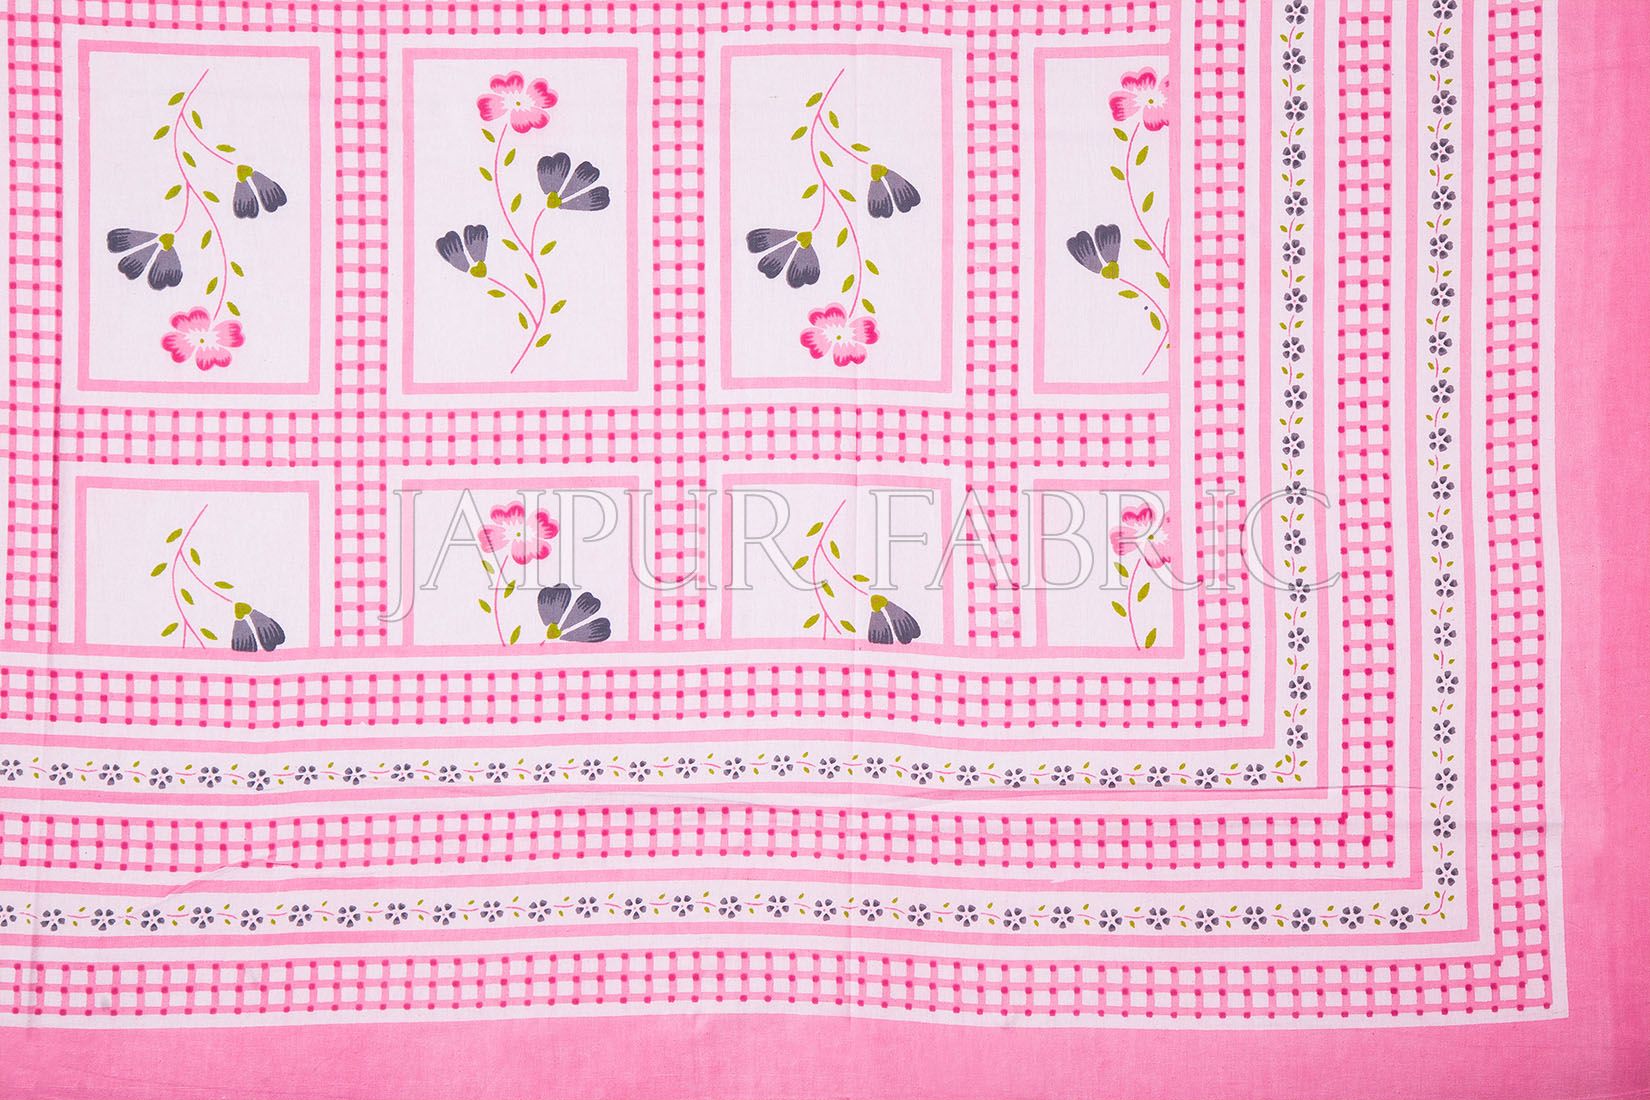 Pink Color White Base Floral Print  Single Bed Sheet